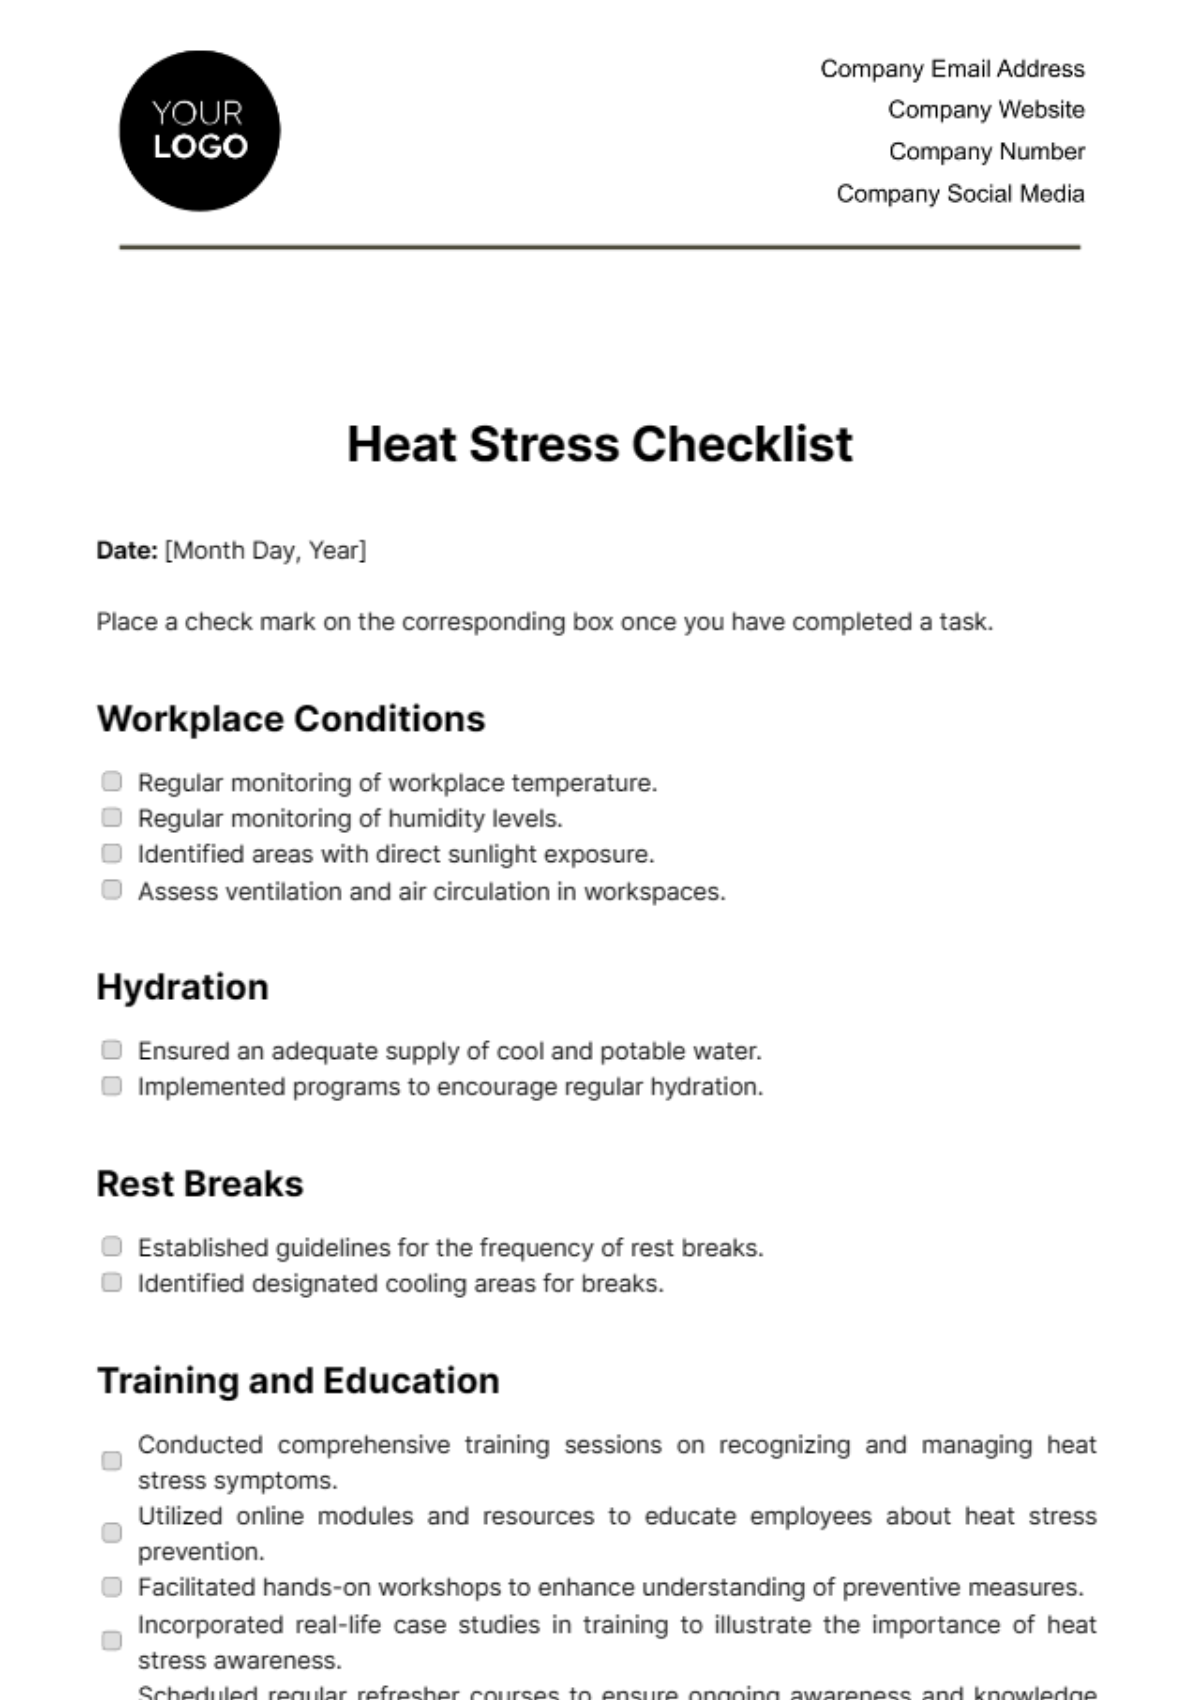 Free Heat Stress Checklist Template